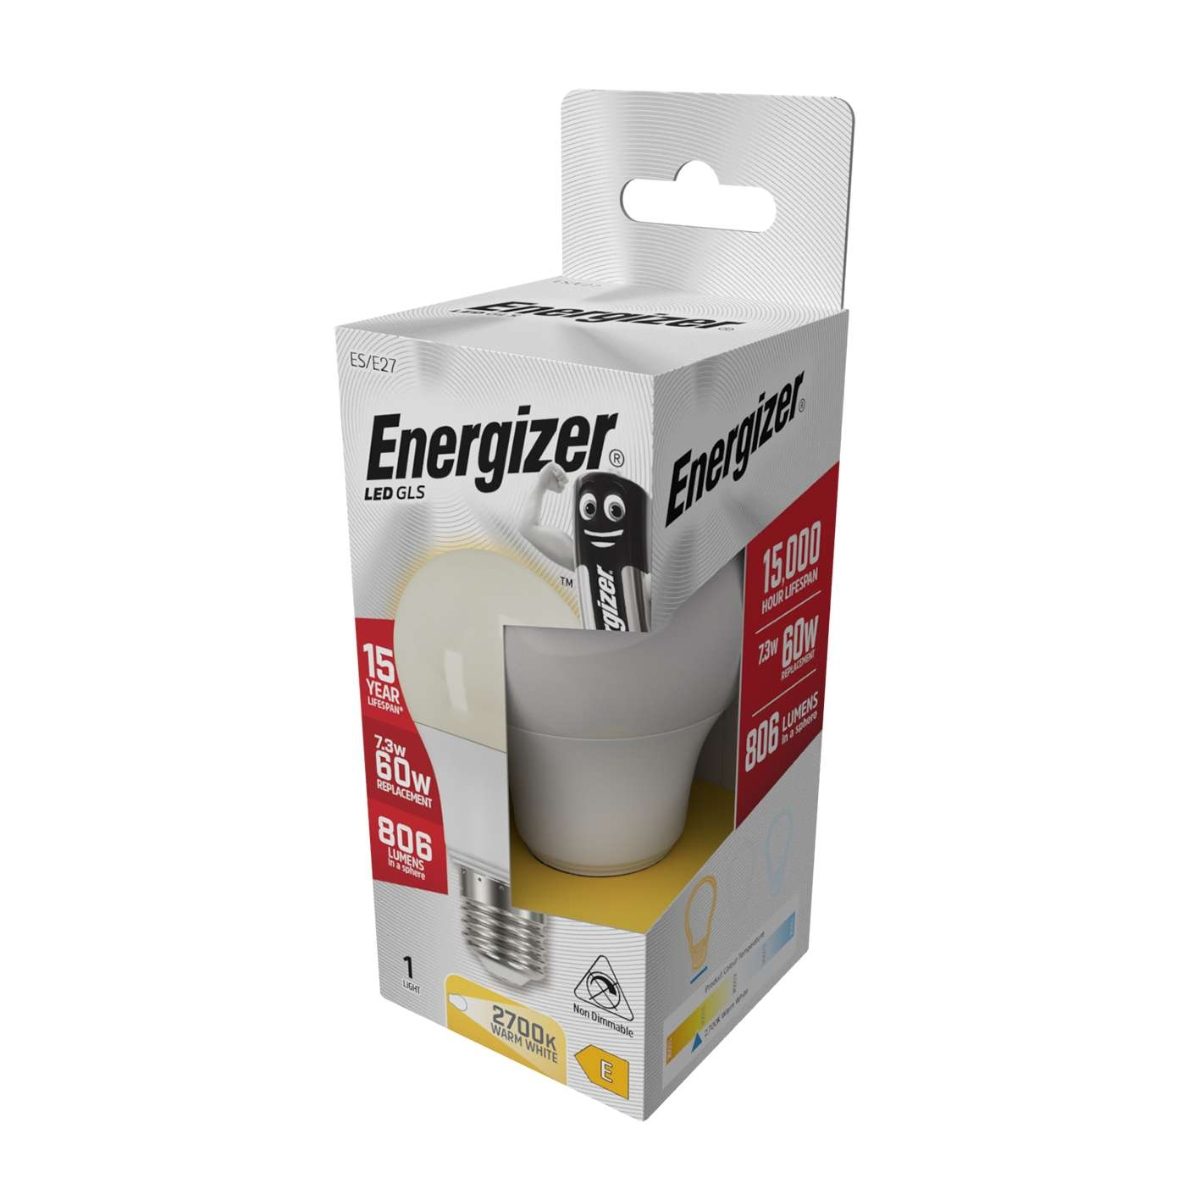 Energizer LED GLS E27 (ES) 806 Lumens 7.3W 2,700K (Warm White), Box of 1